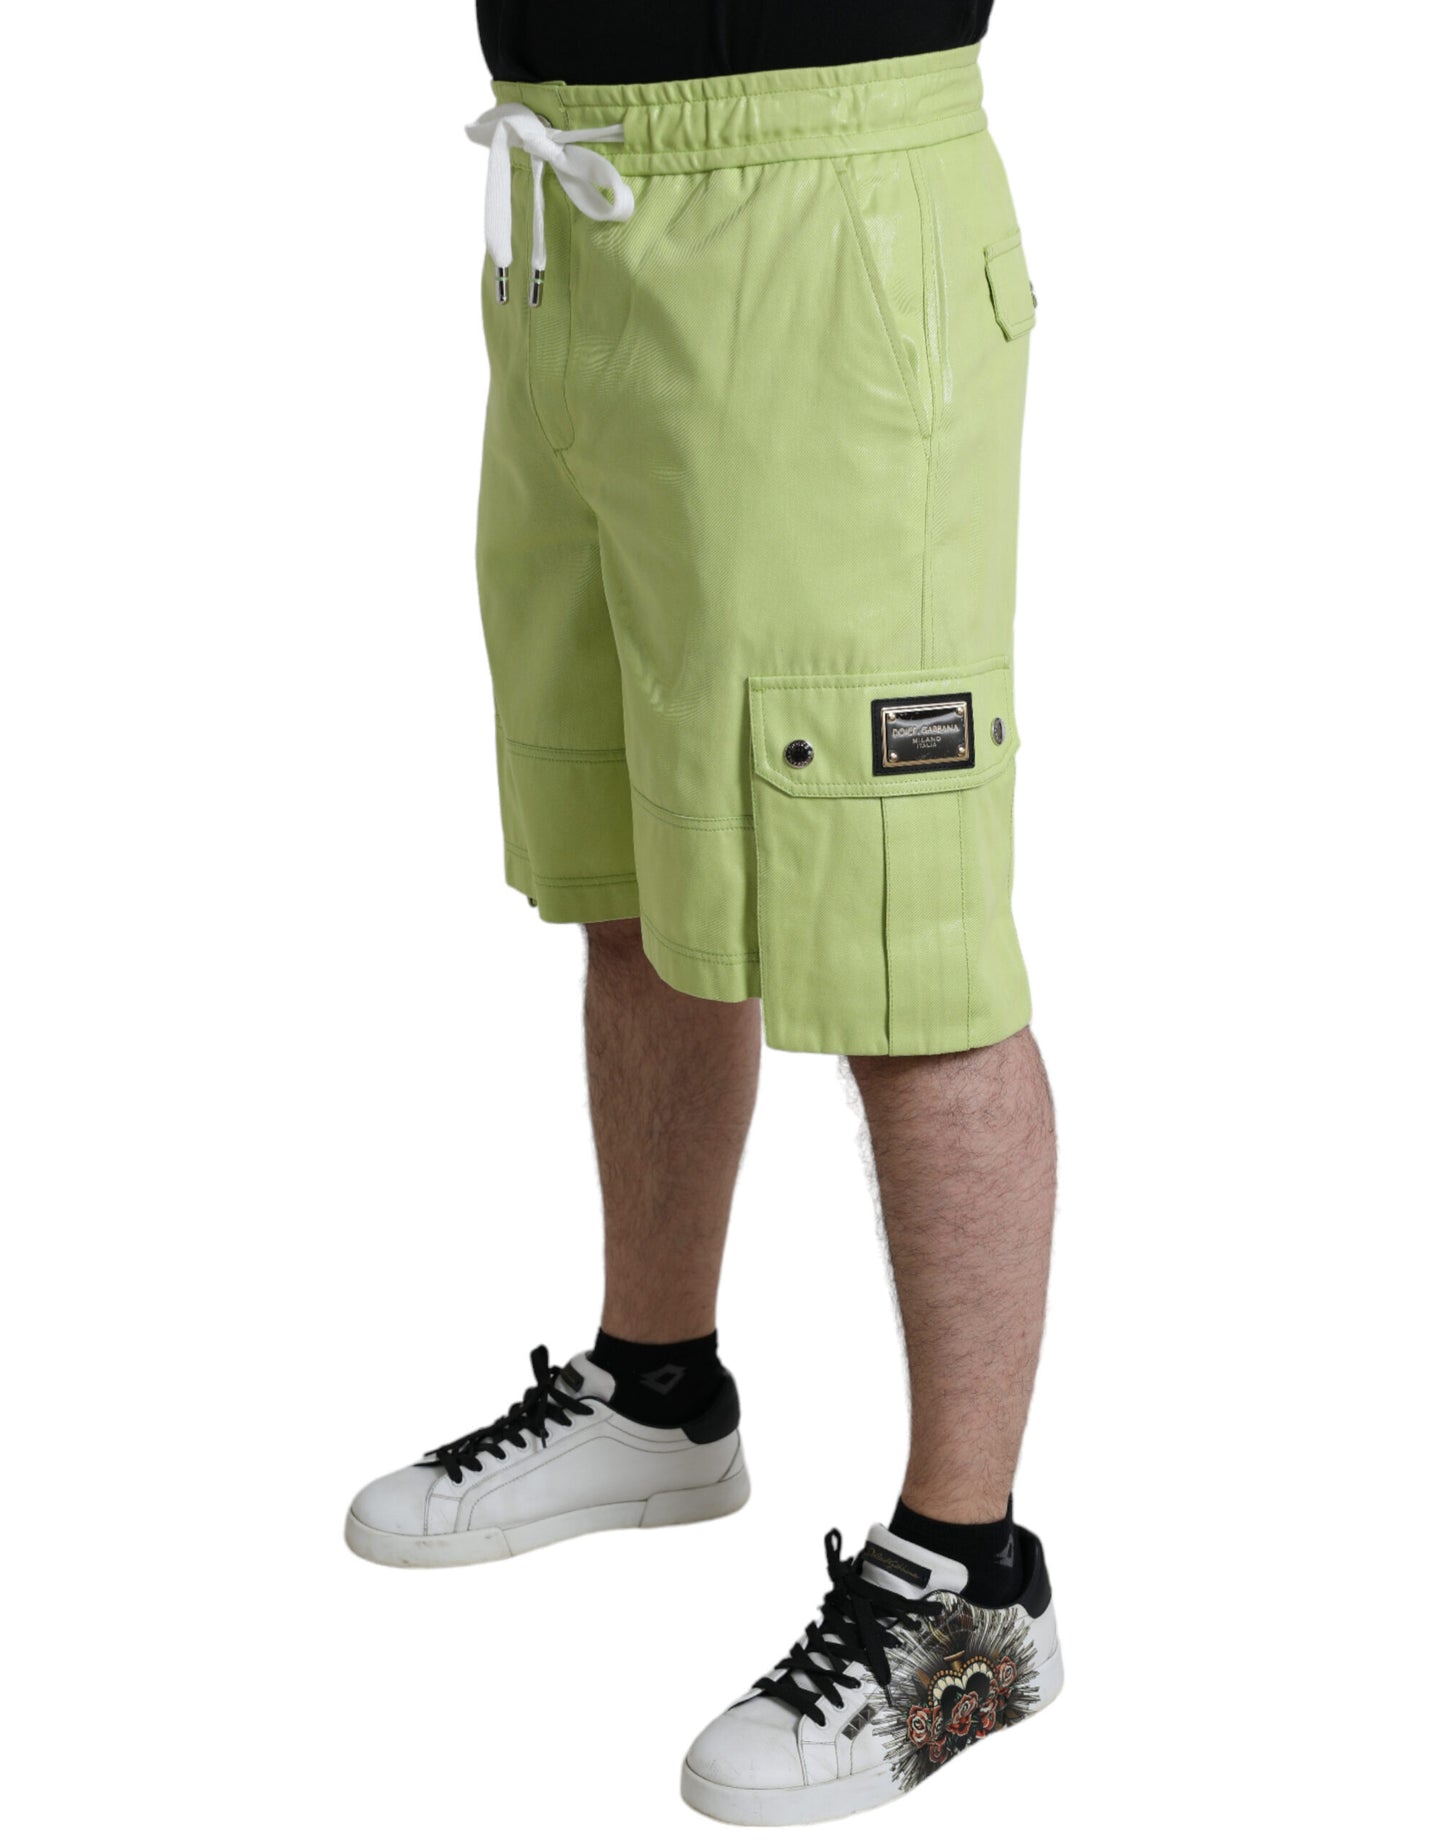 Chic Light Green Cotton Bermuda Shorts